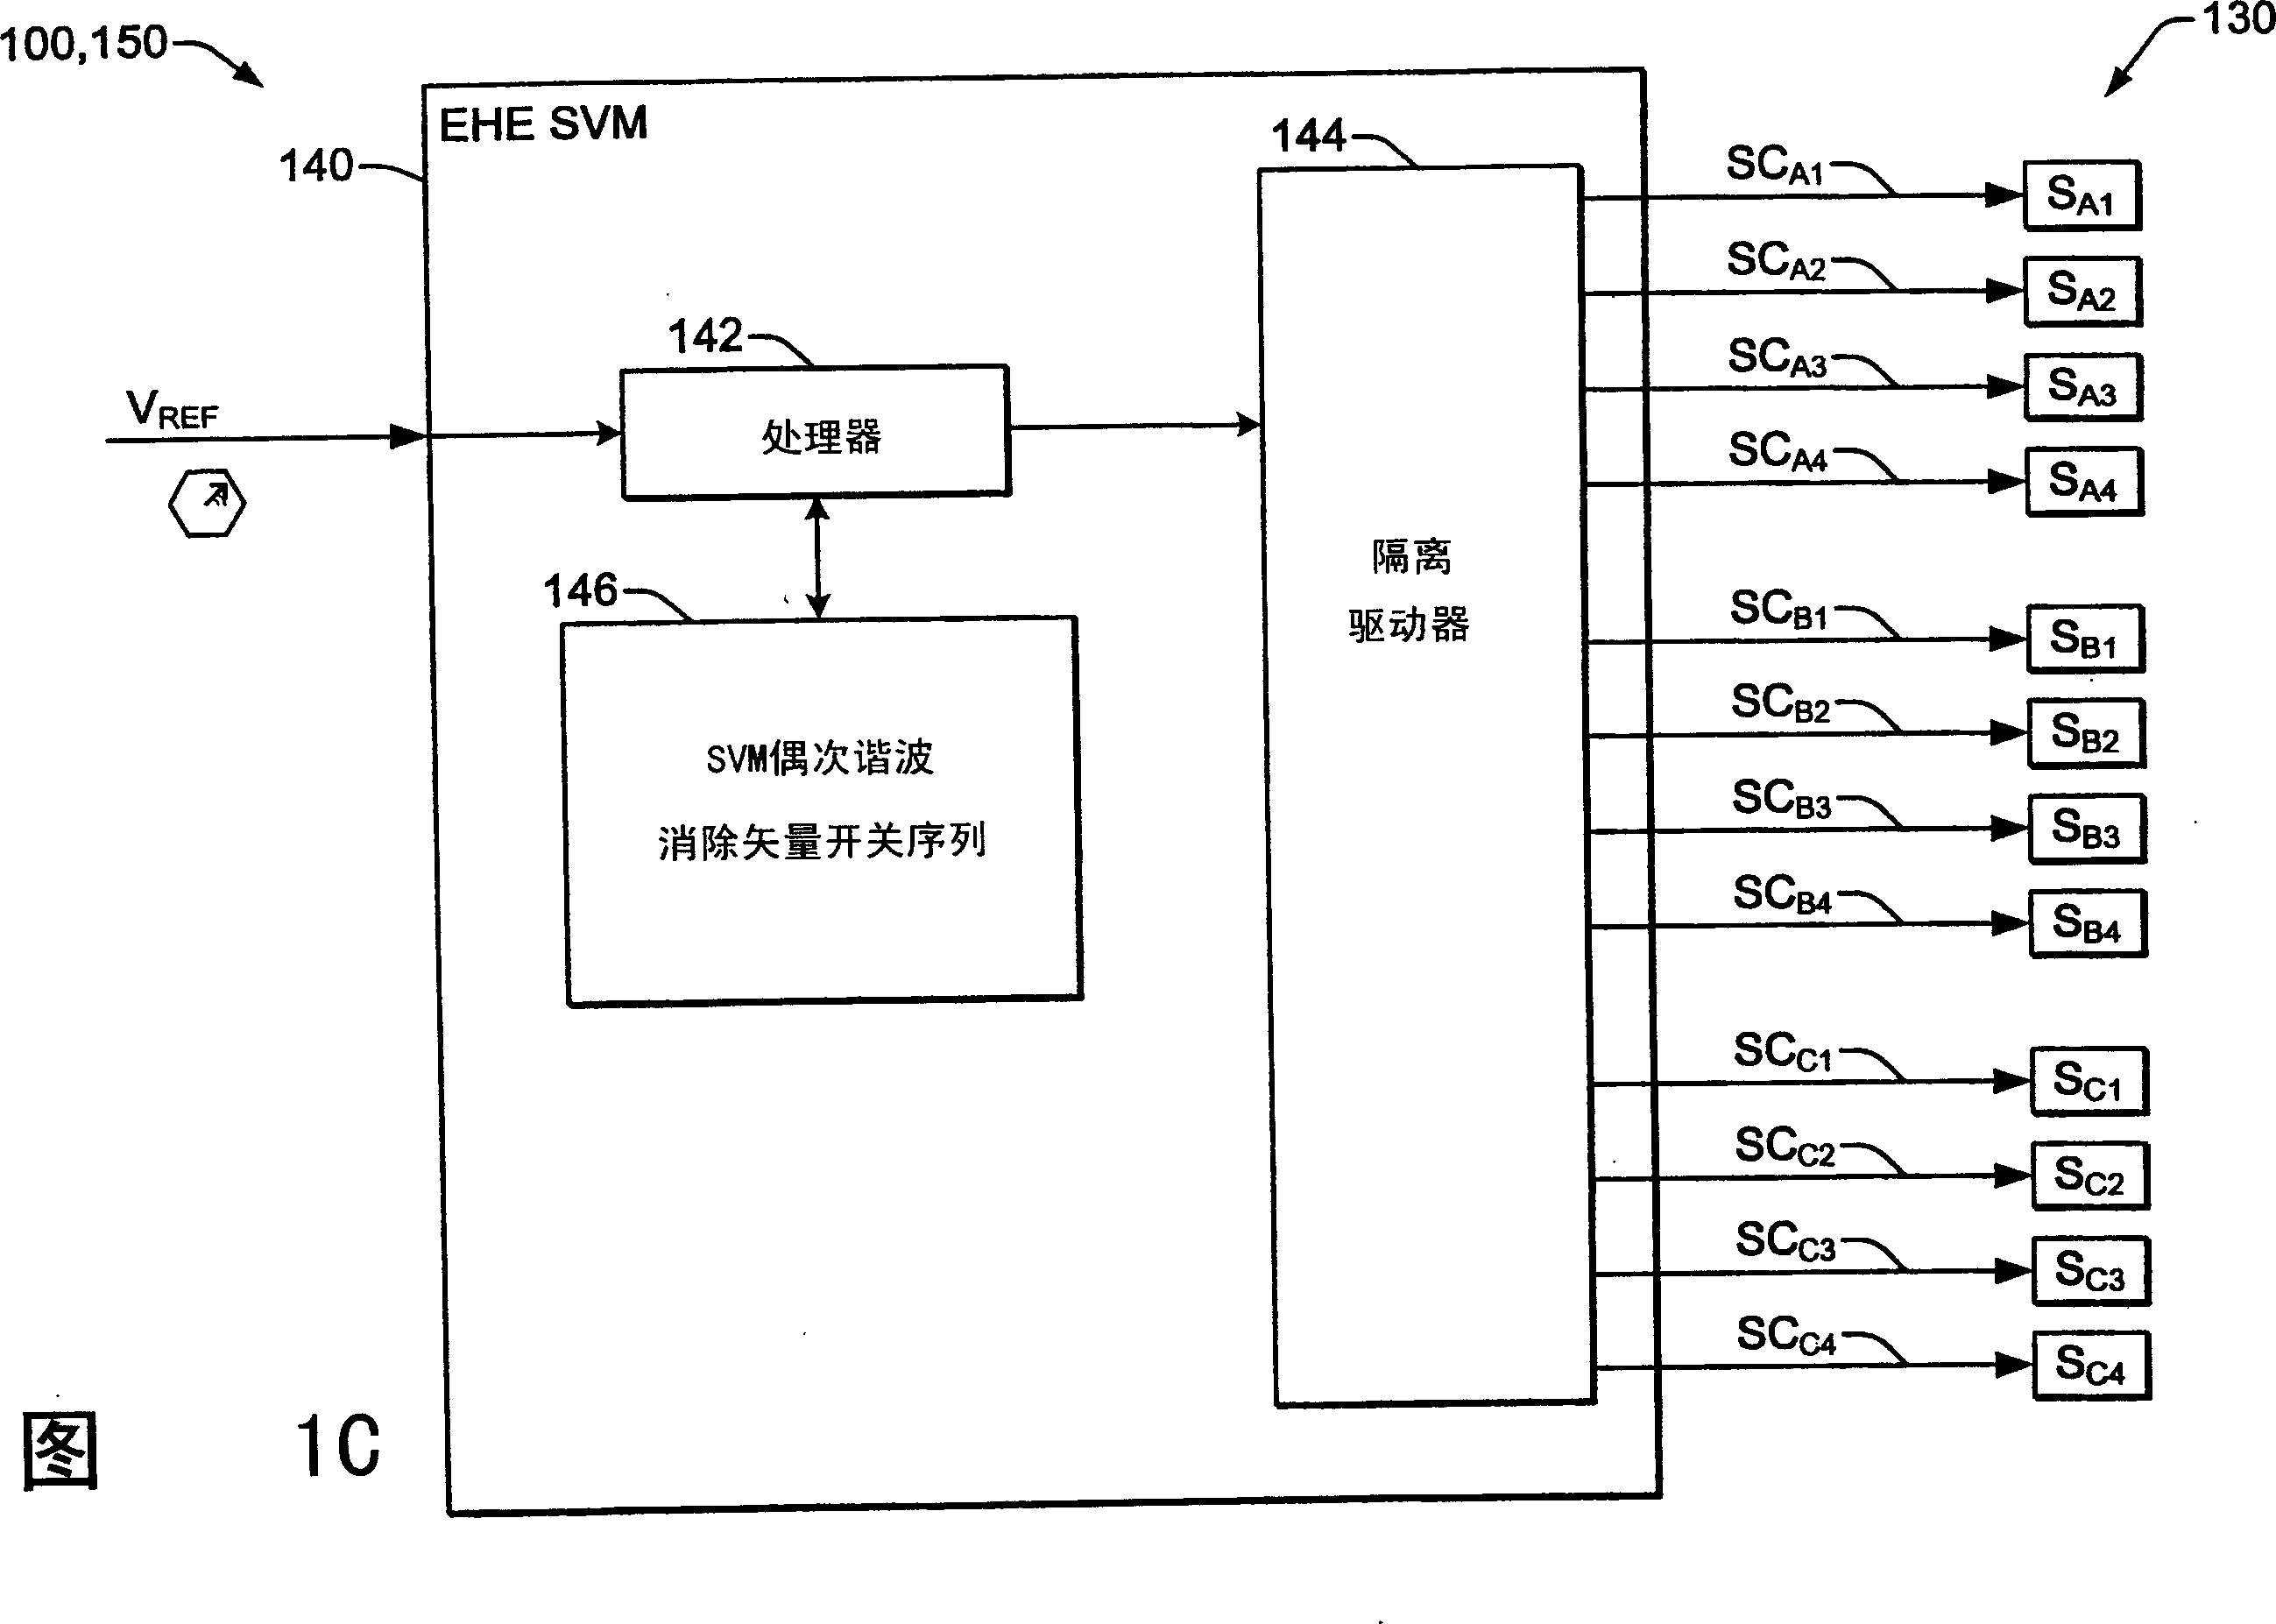 DC voltage balance control for three-level npc power converters with even-order harmonic elimination scheme